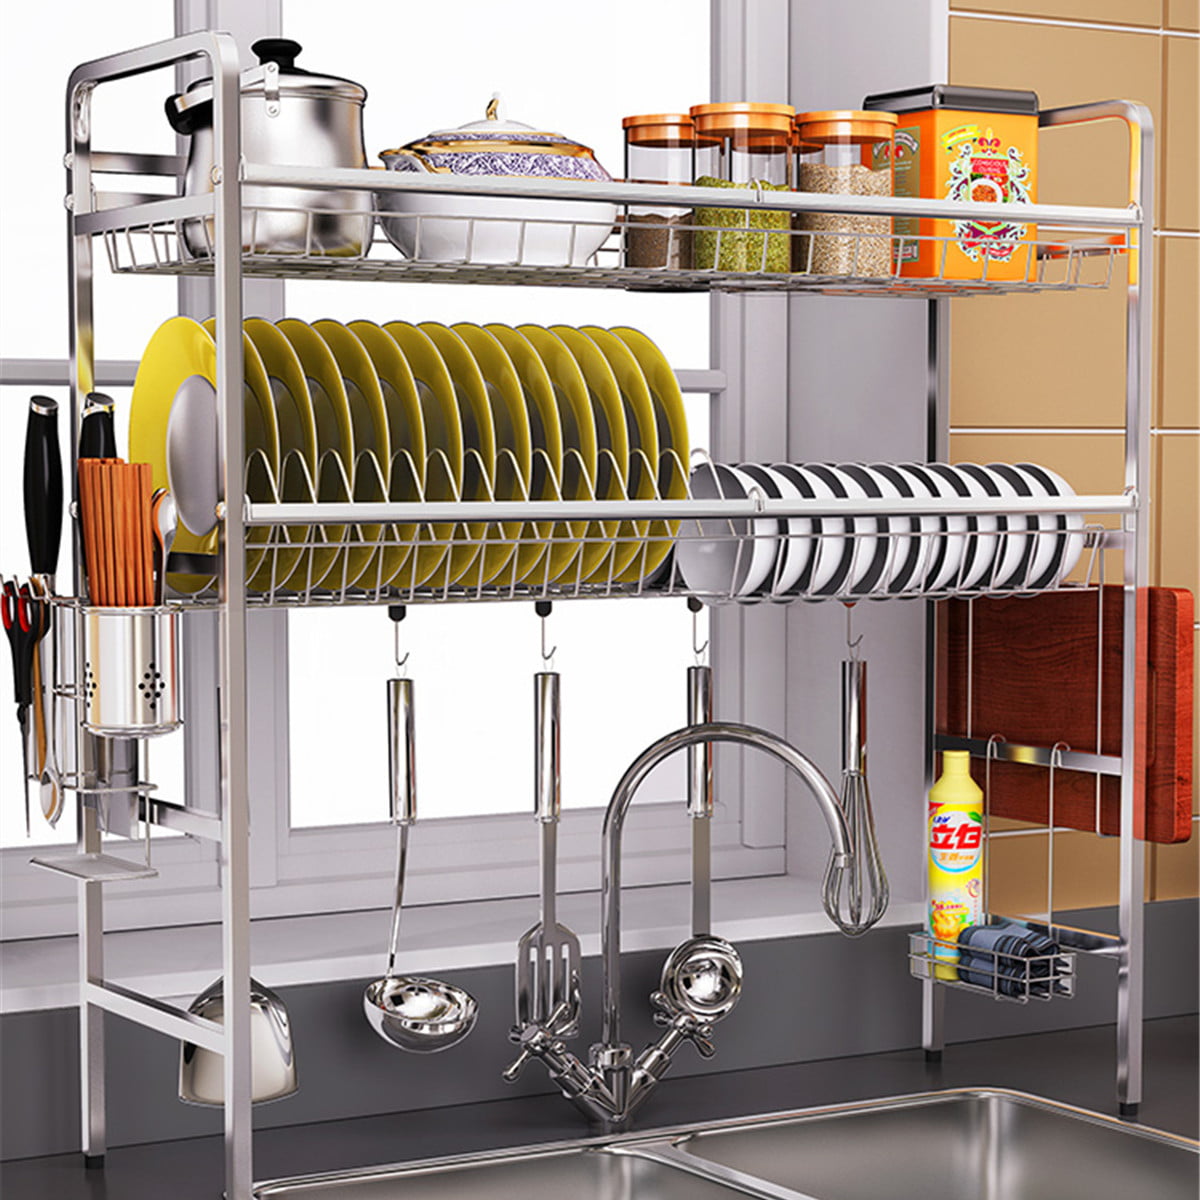 304 Stainless Steel 2 Tier Dish Drying Rack Over Sink Drainer Shelf Storage Rack Kitchen Cutlery